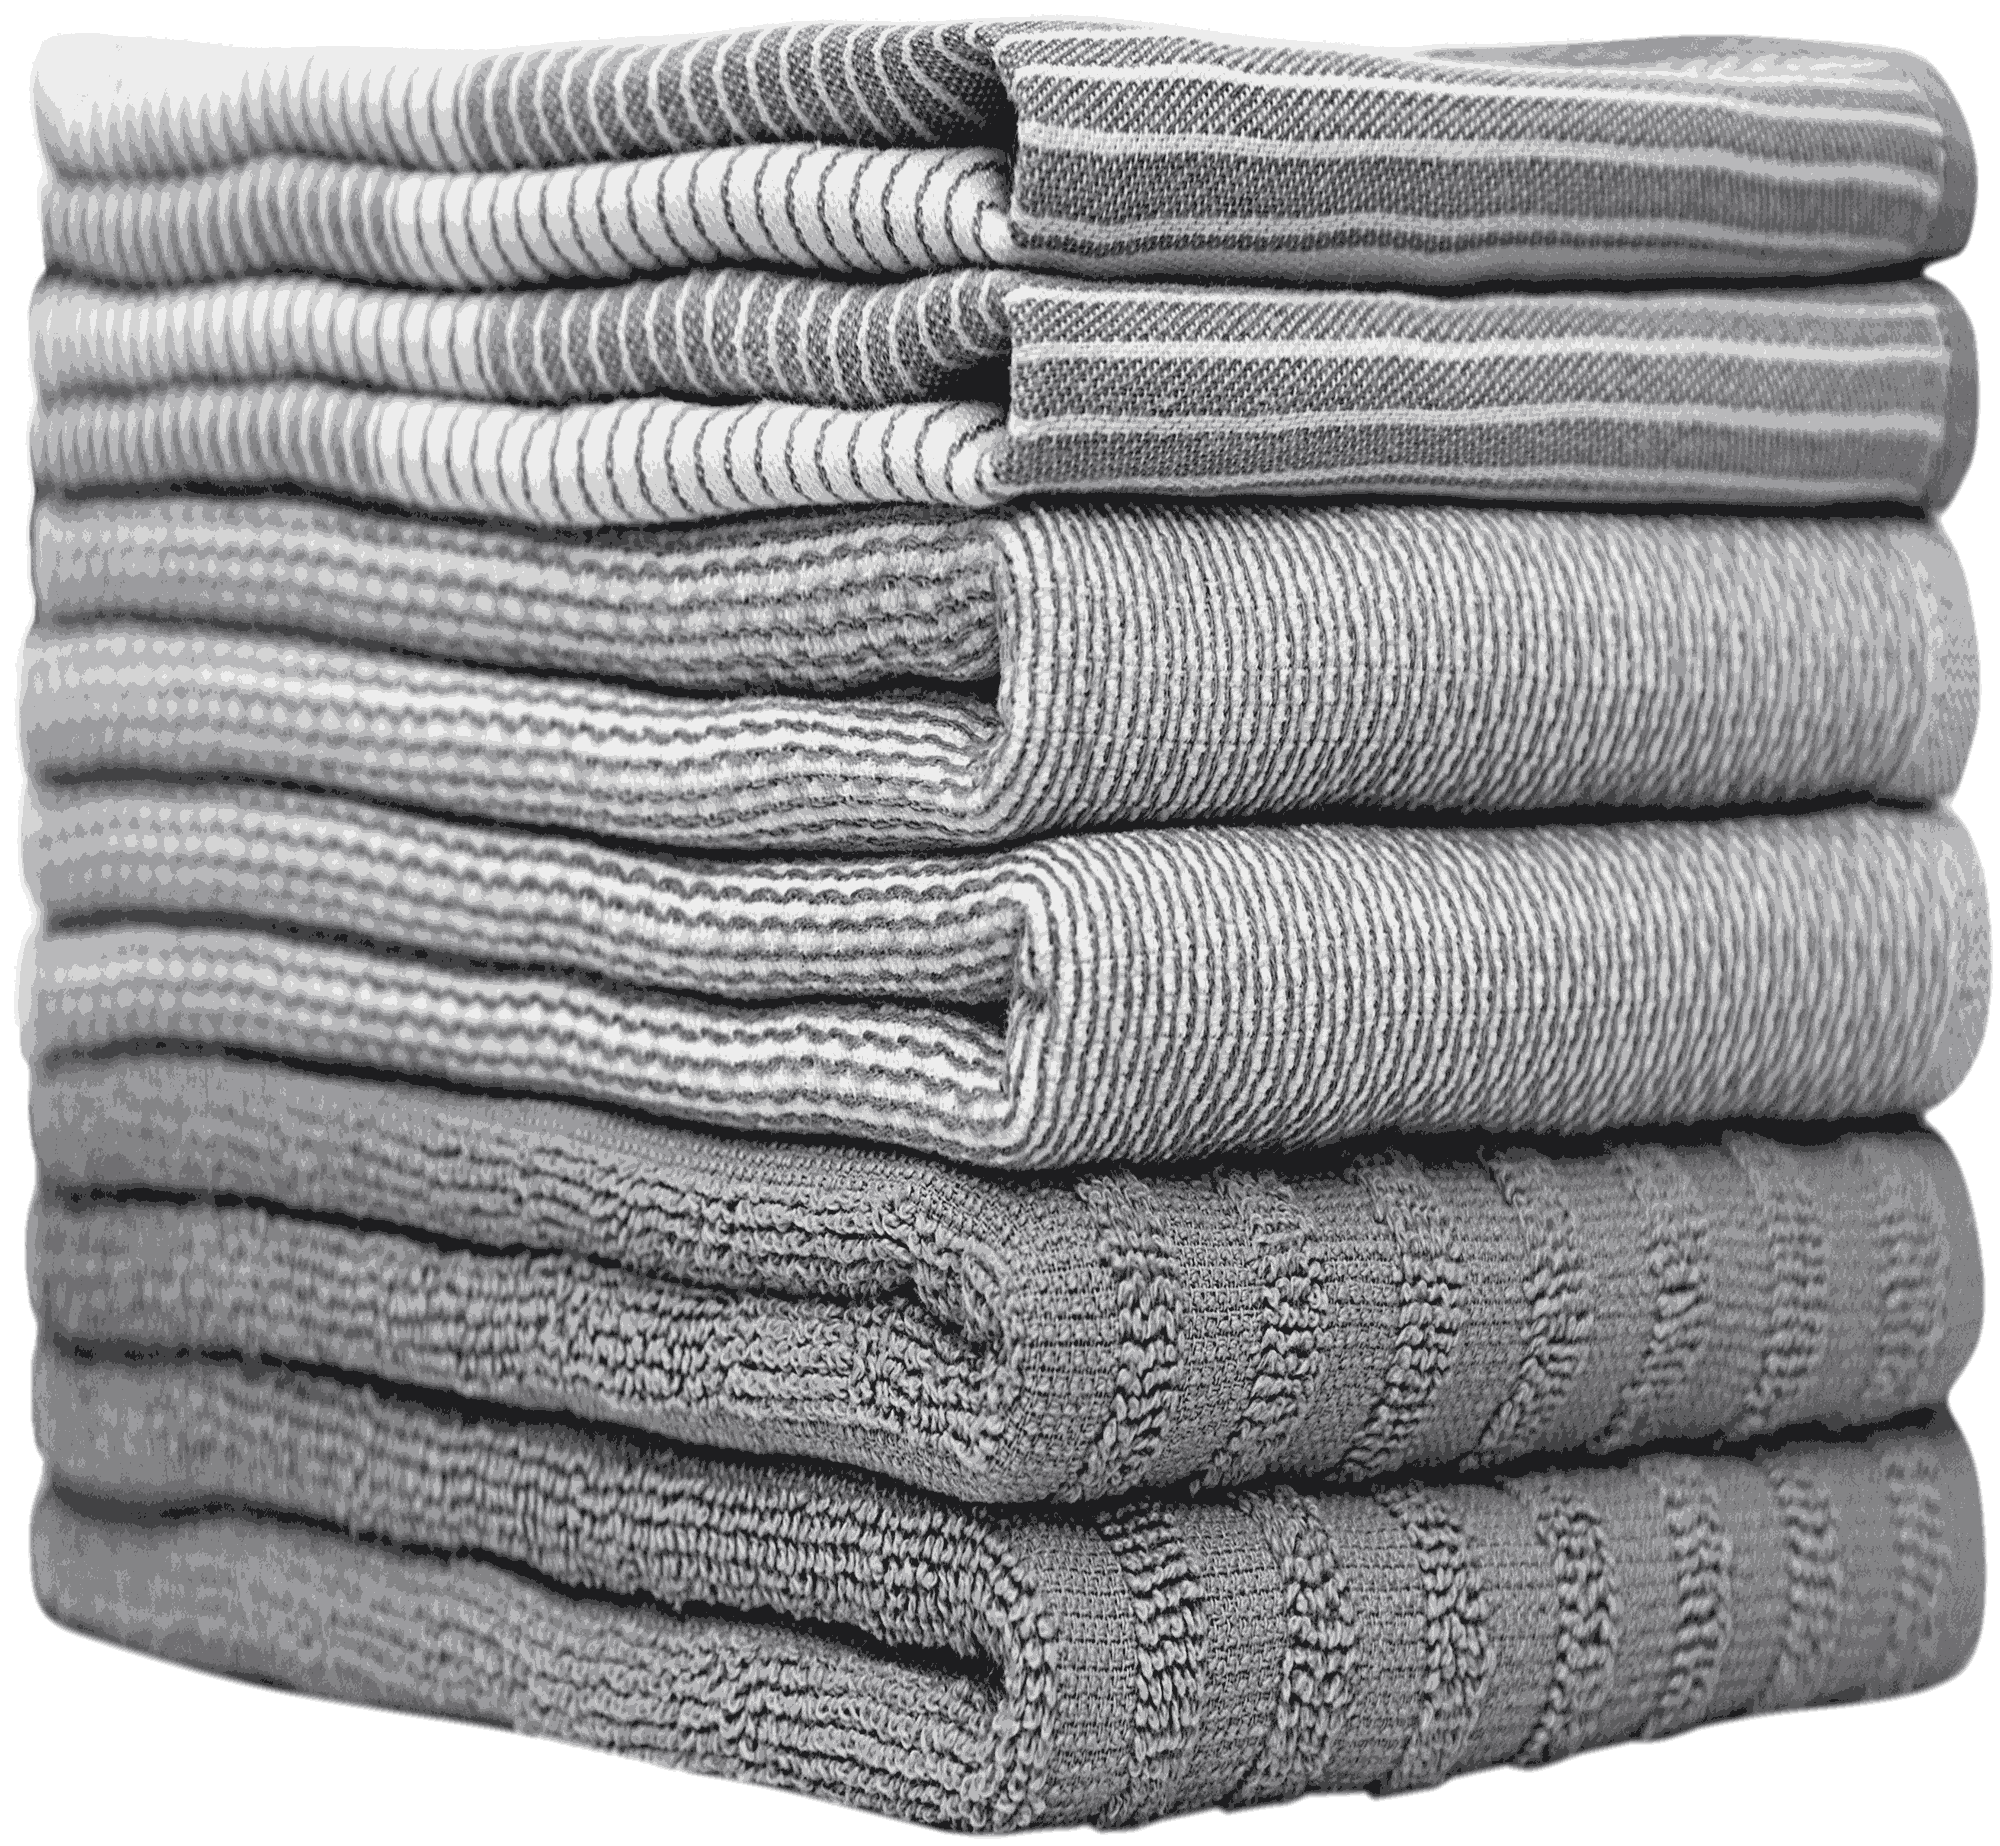 Premium Kitchen Towels (20x 28, 6 Pack) Large Cotton Kitchen Hand